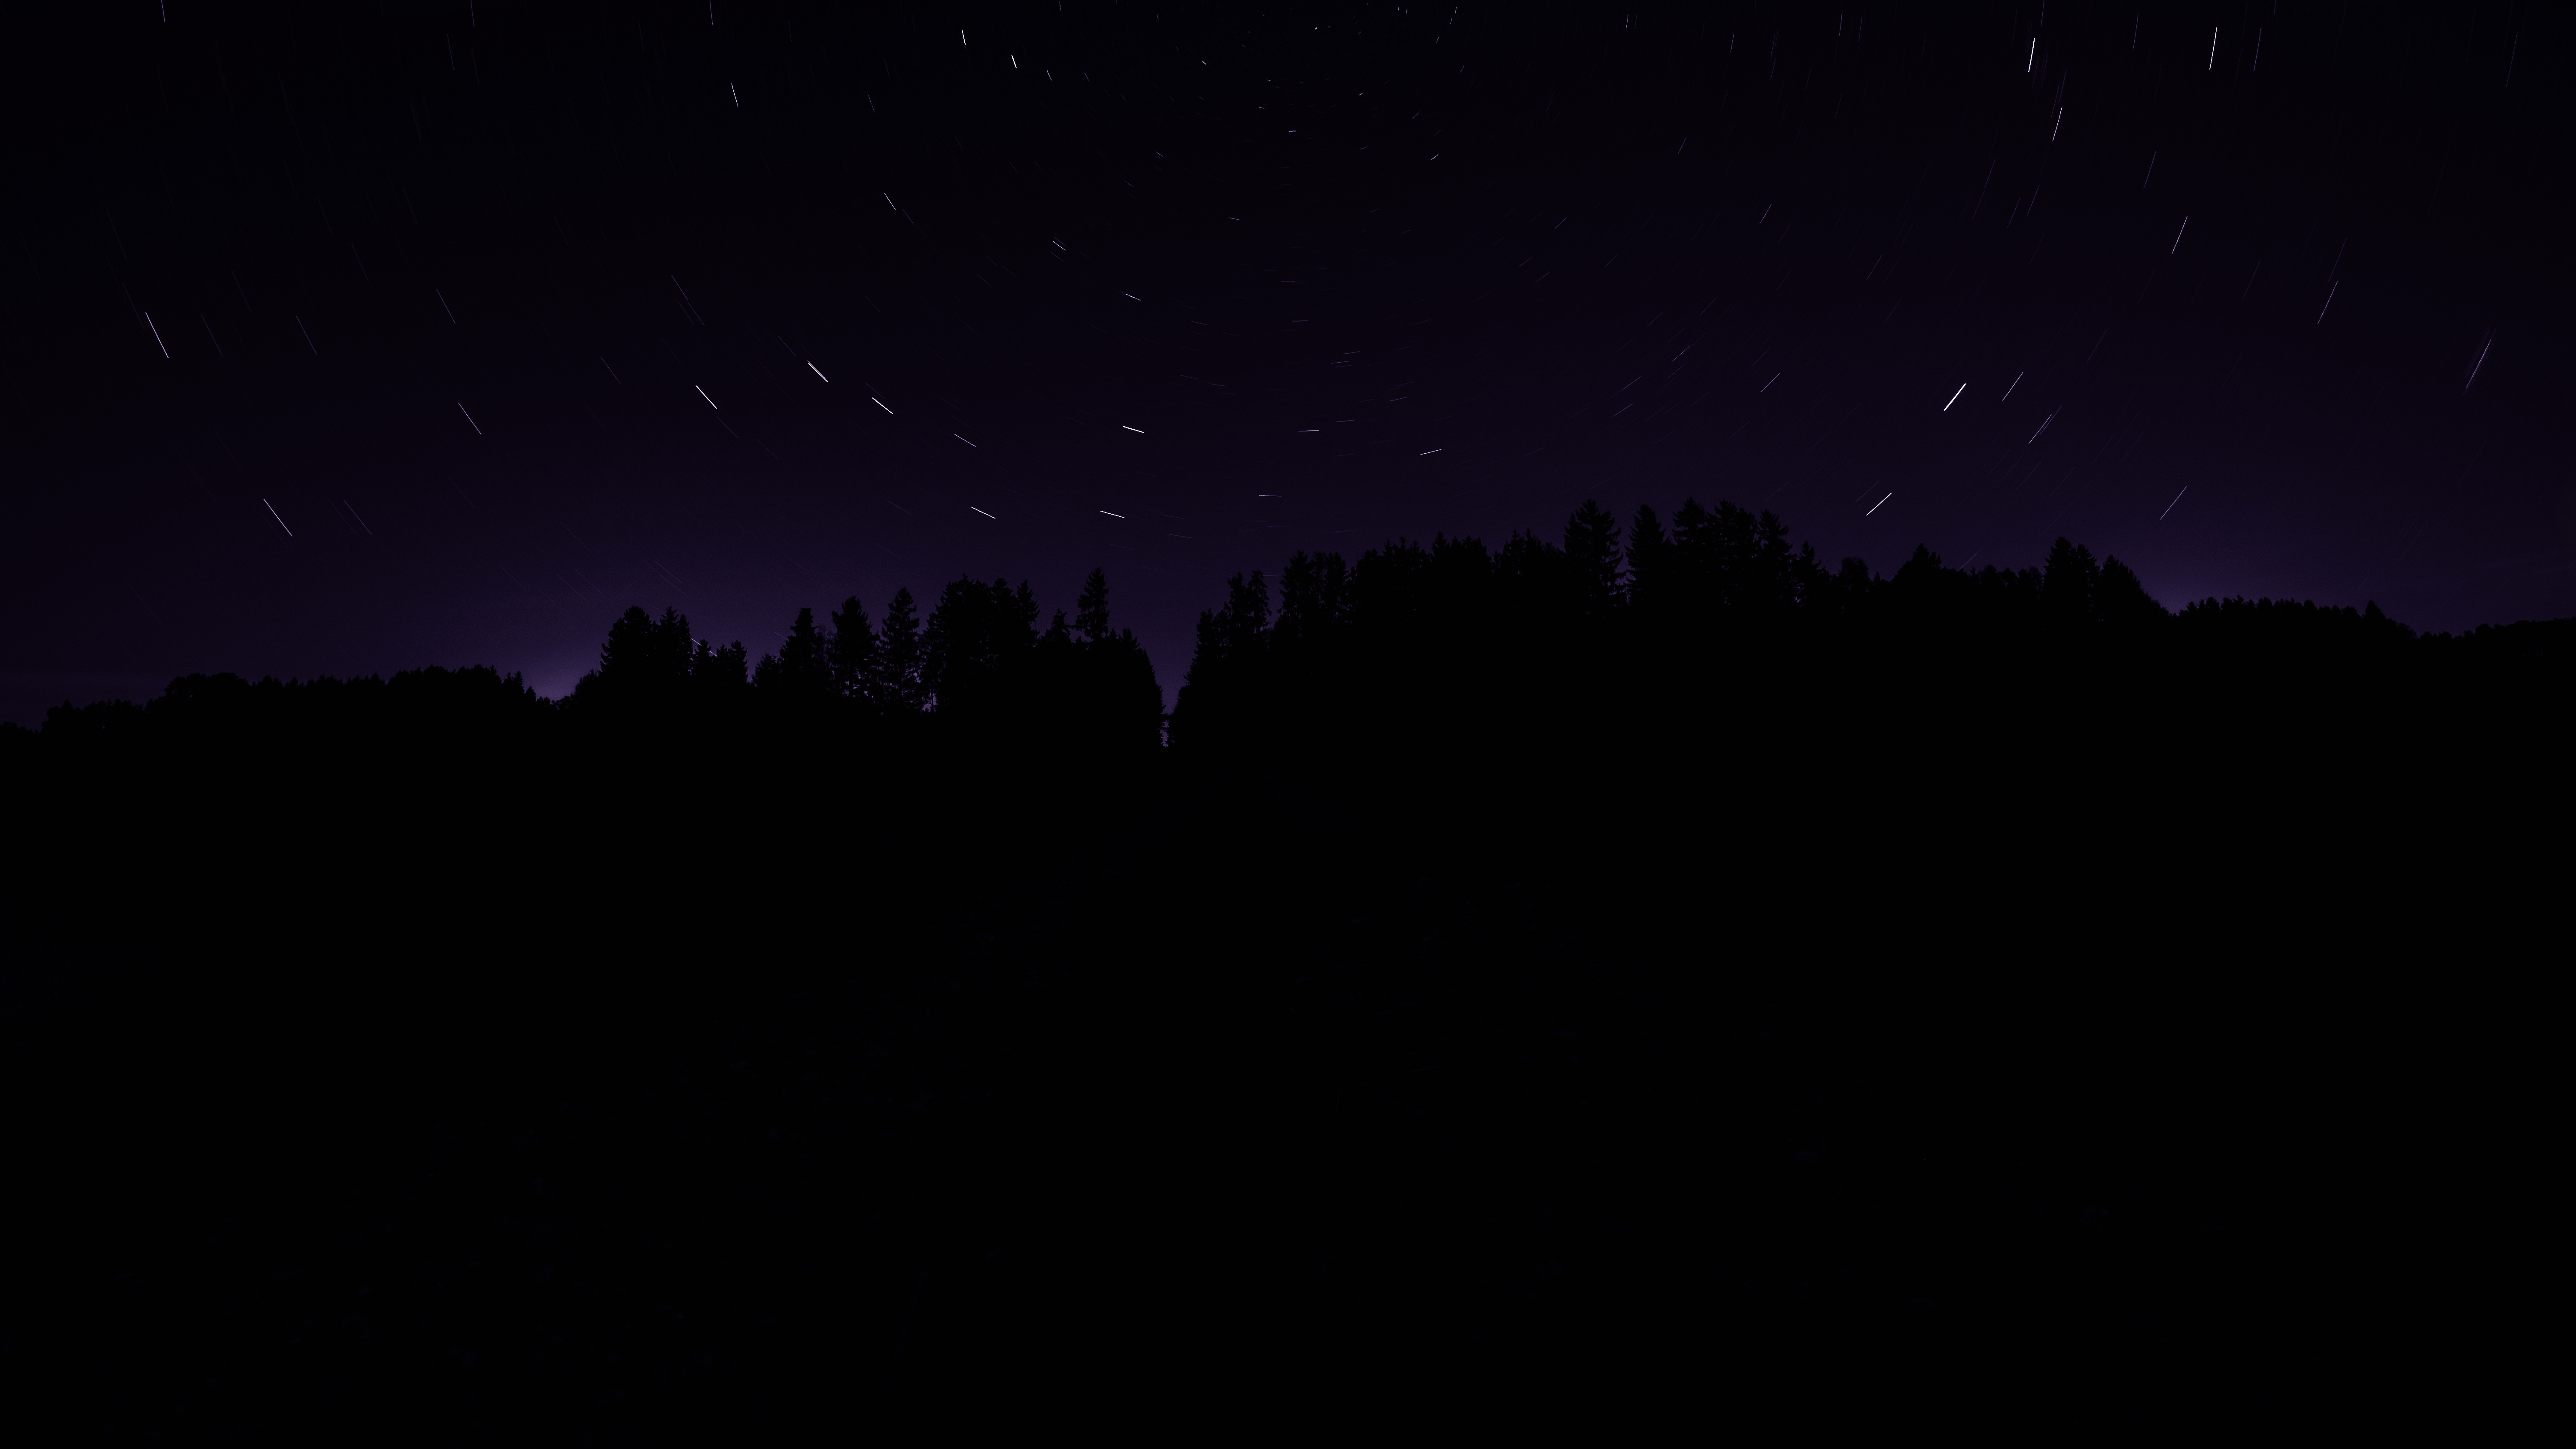 General 6000x3376 long exposure night forest landscape dark stars fisheye lens purple sky trees